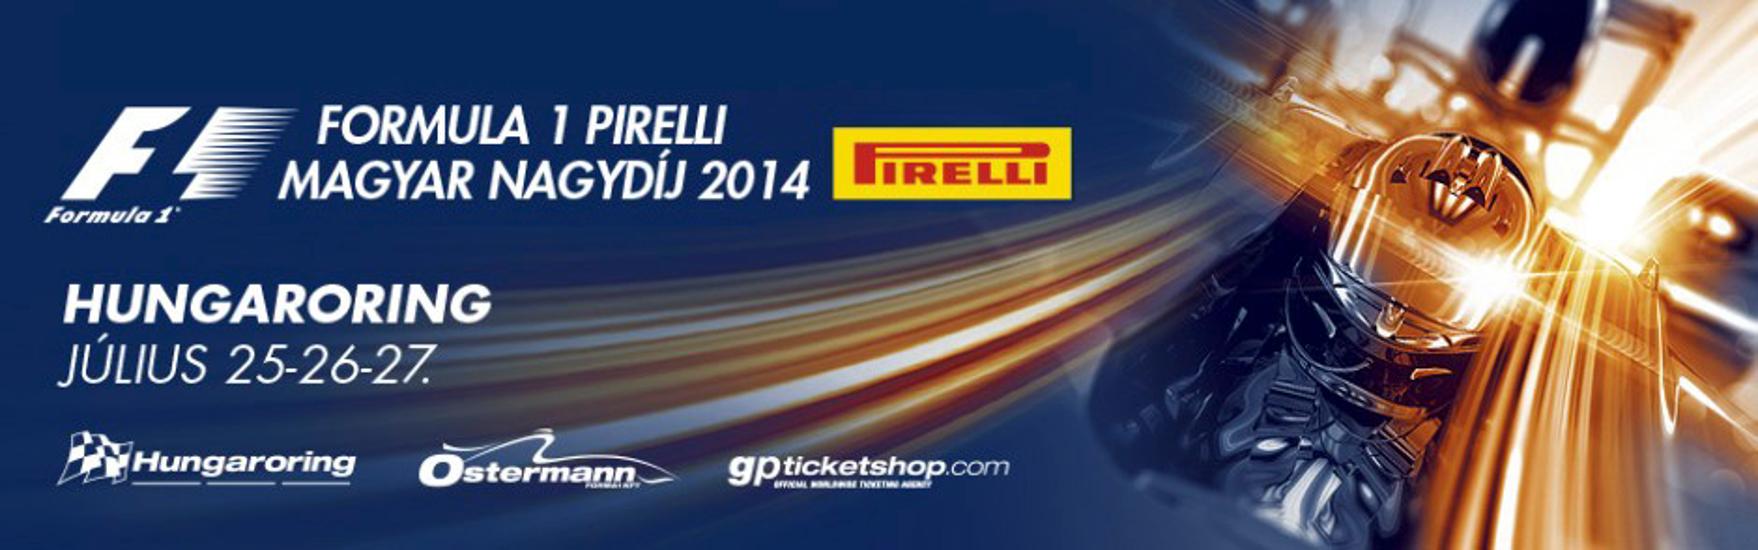 Hungarian Formula One Grand Prix 2014, 25 - 27 July